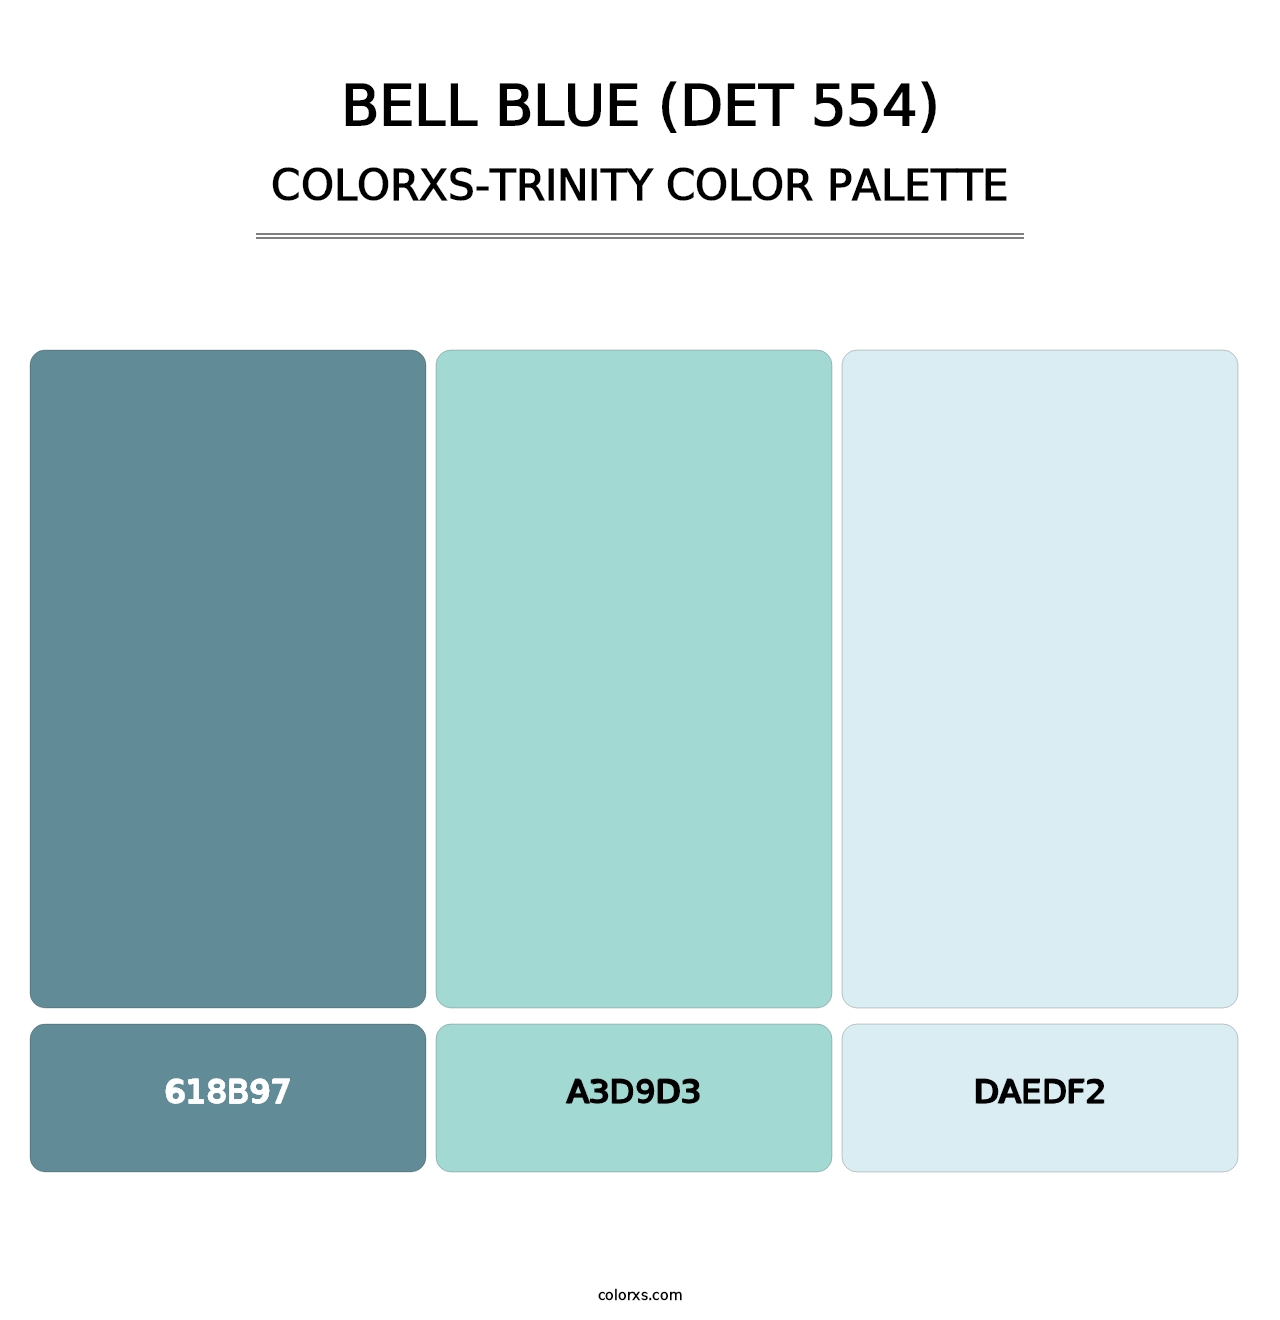 Bell Blue (DET 554) - Colorxs Trinity Palette